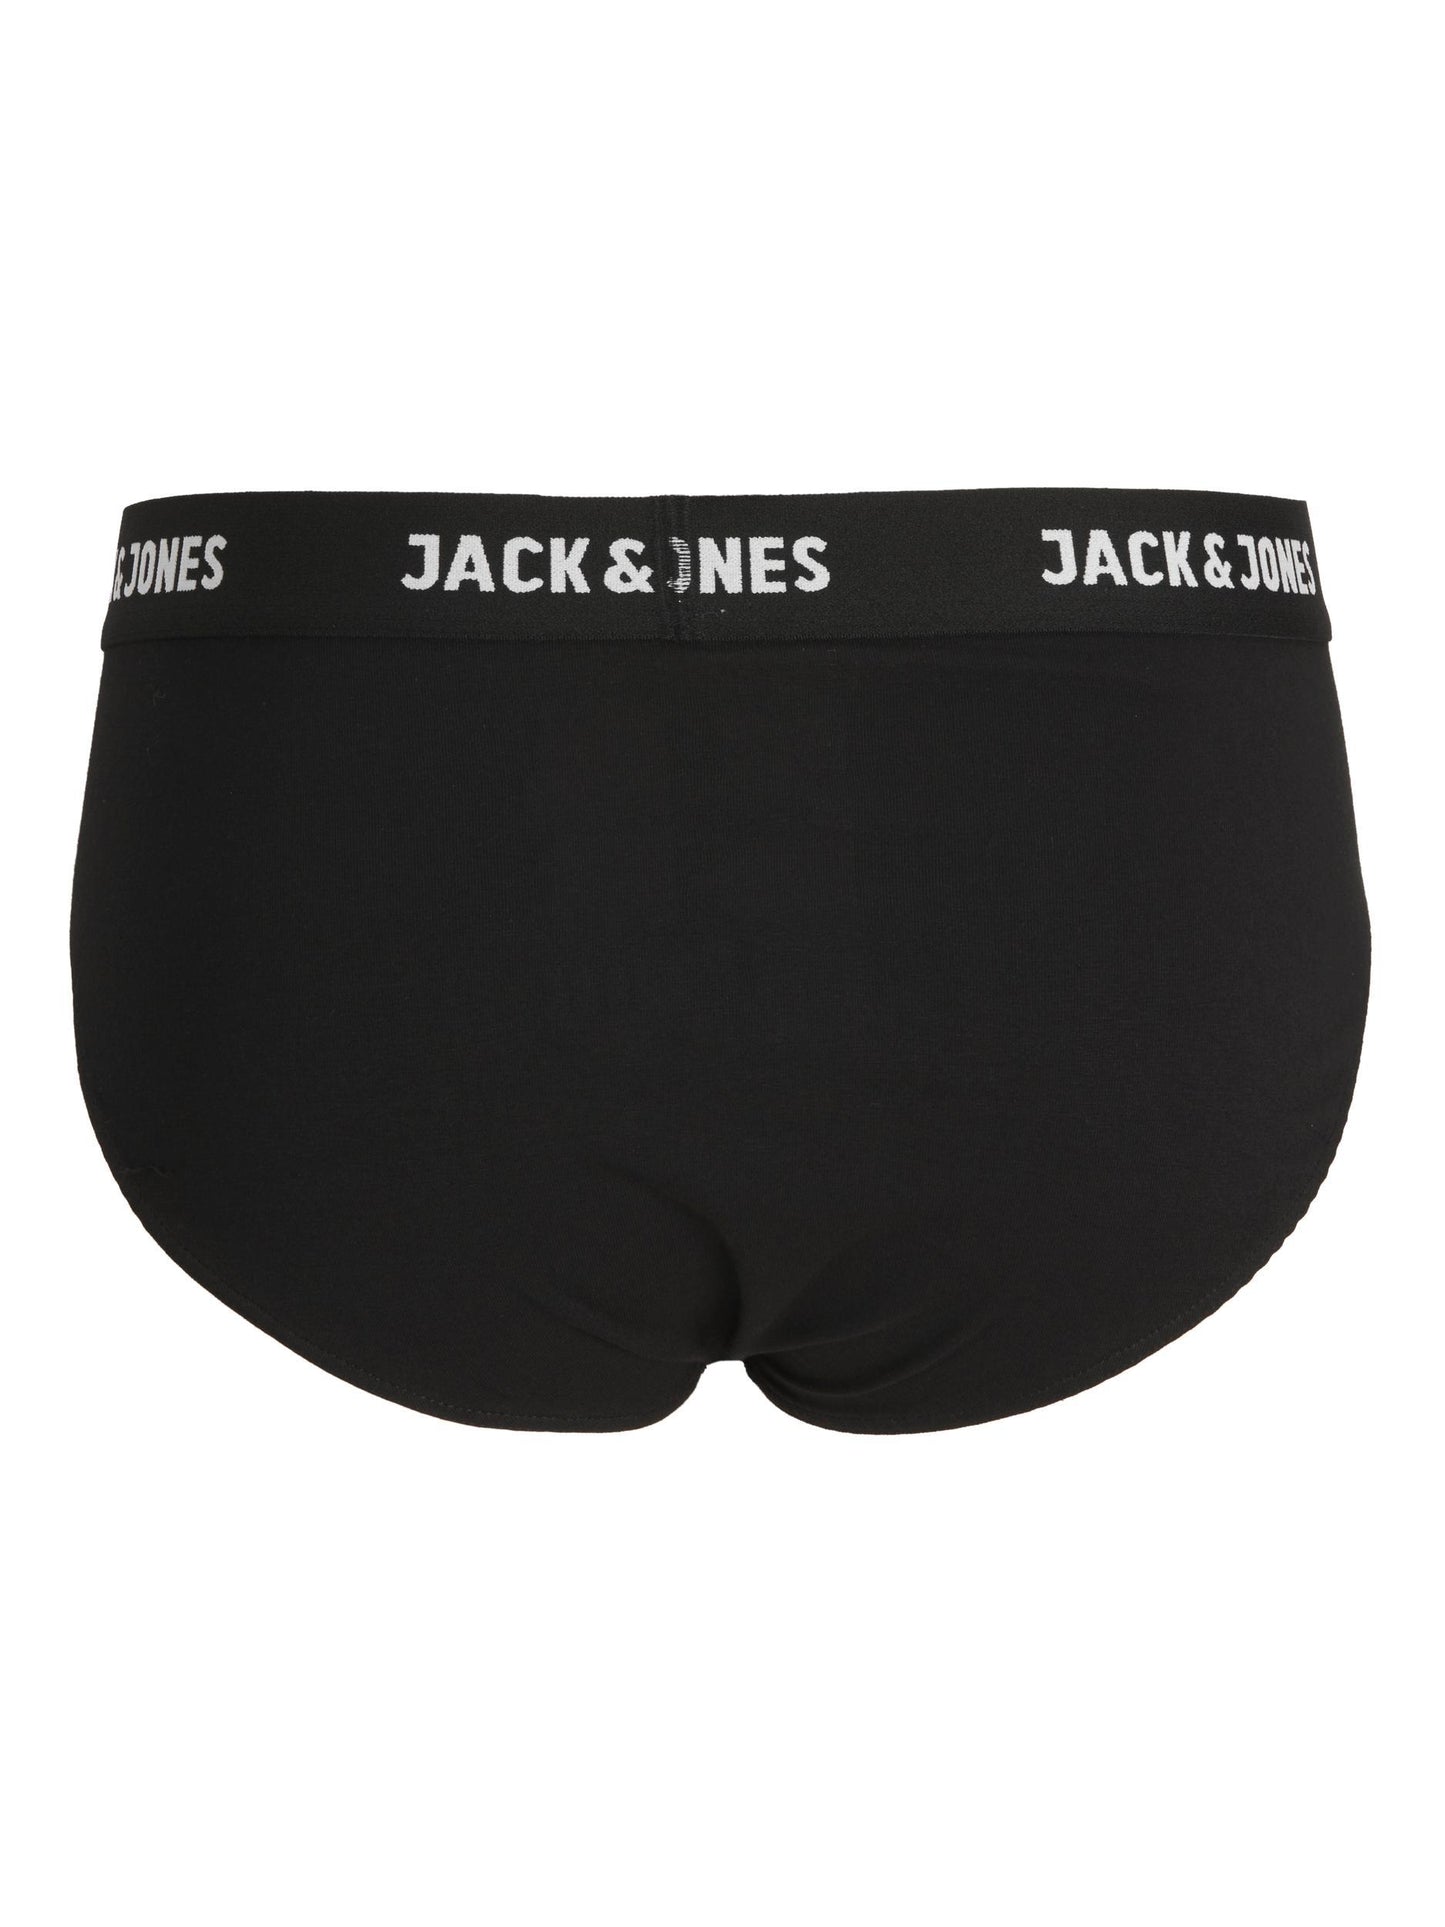 Slip Jacsolid Briefs 5 Pack Jack&Jones